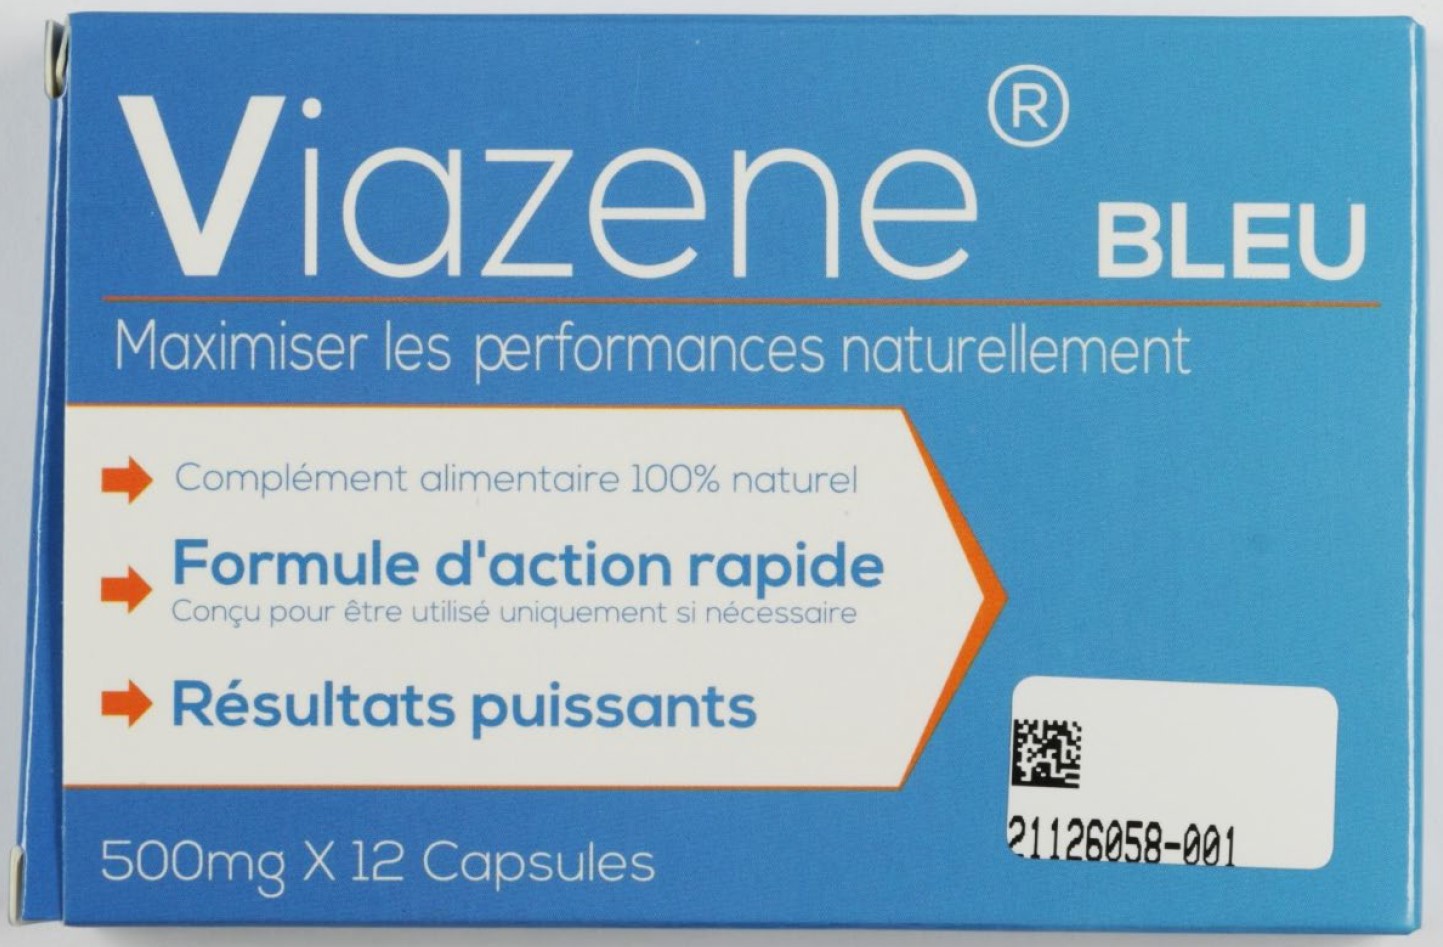 Viazene Bleu - Illegales Potenzmittel (Illegal potency enhancer)